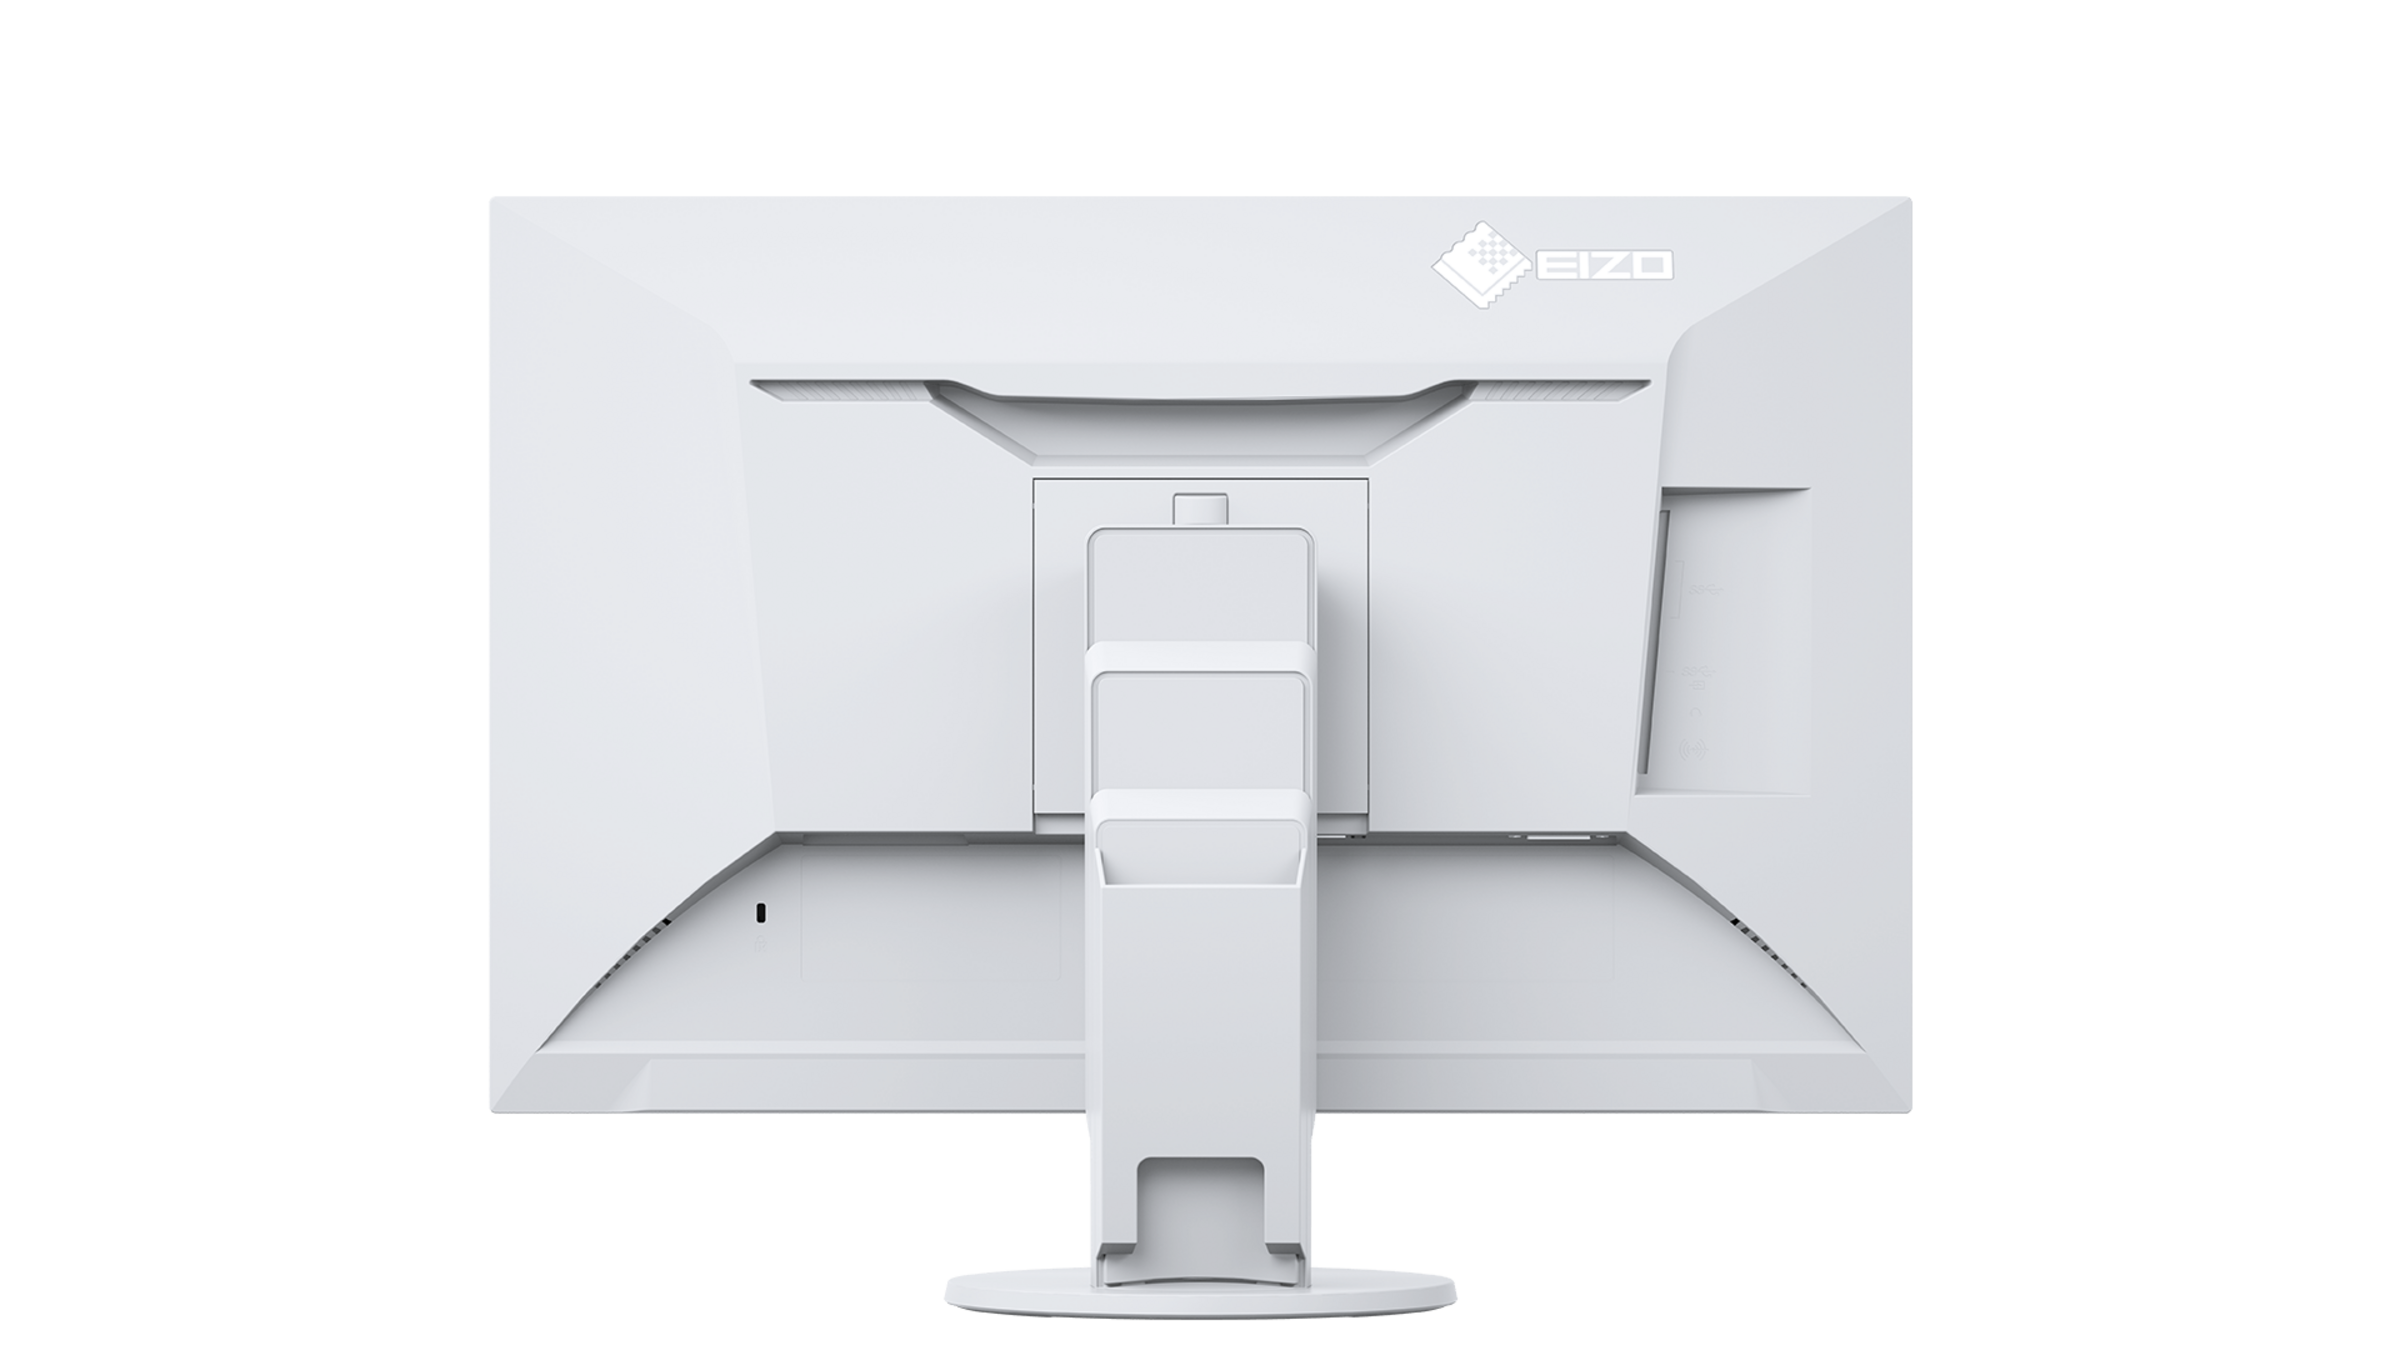 FlexScan EV2456 | Monitor with 1 mm bezel in black